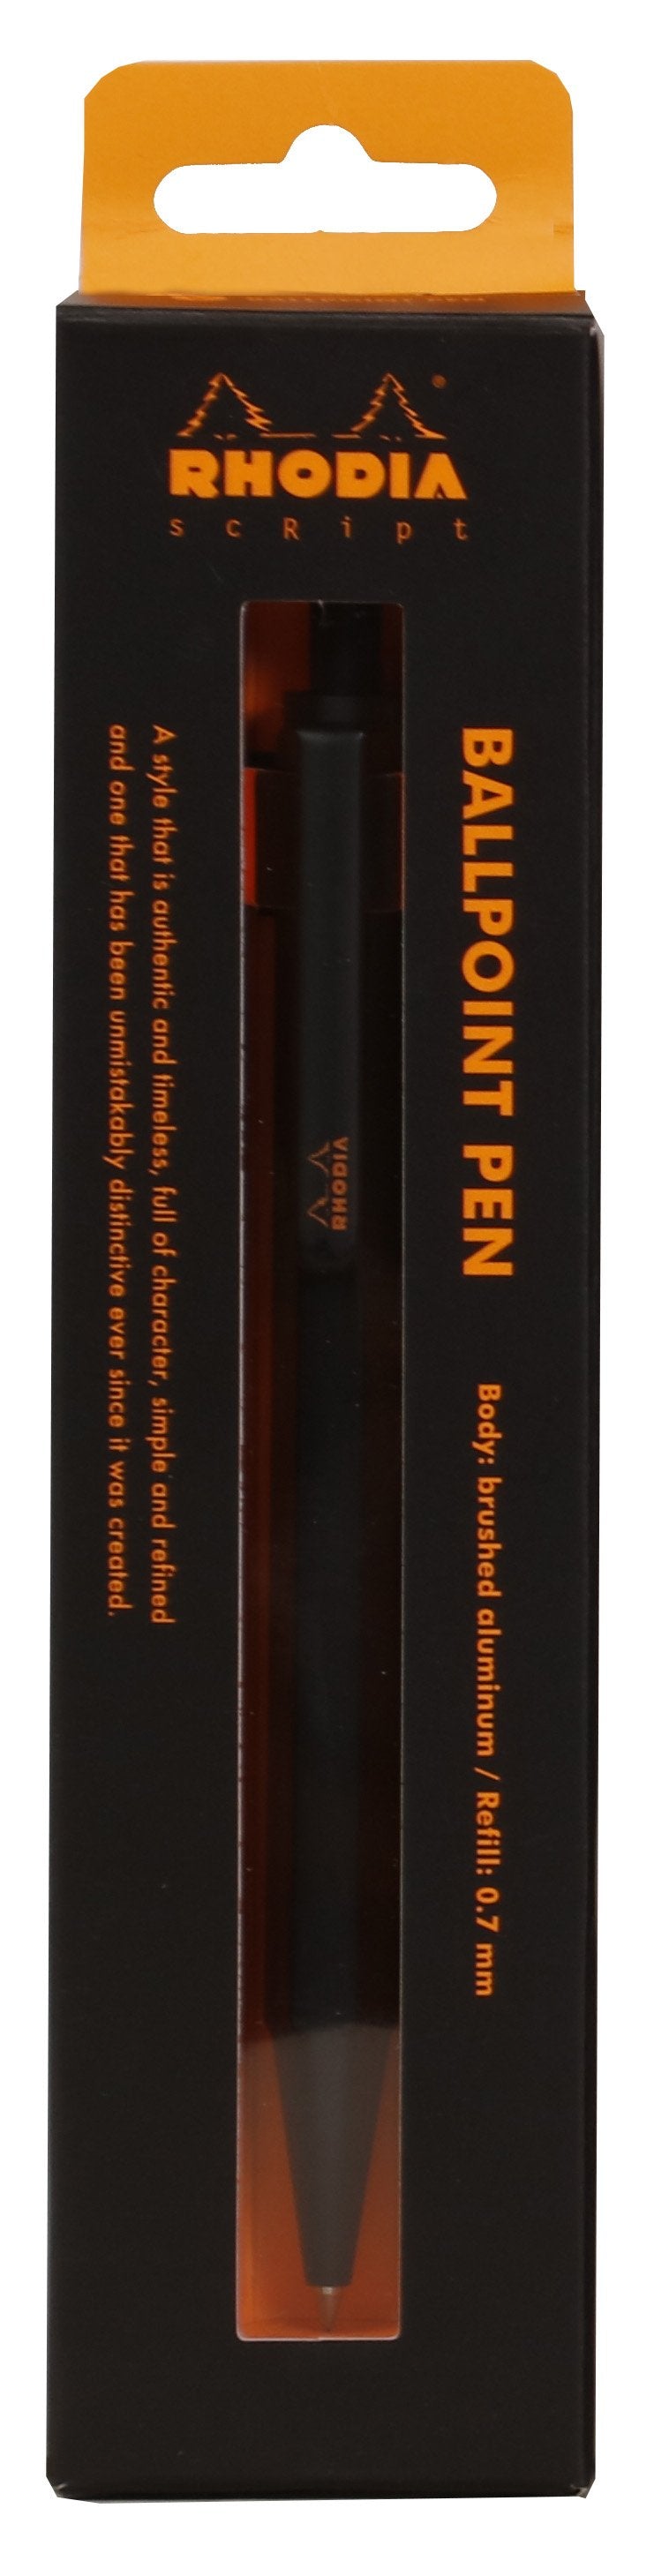 Rhodia scRipt Ballpoint Pen 0.7 mm